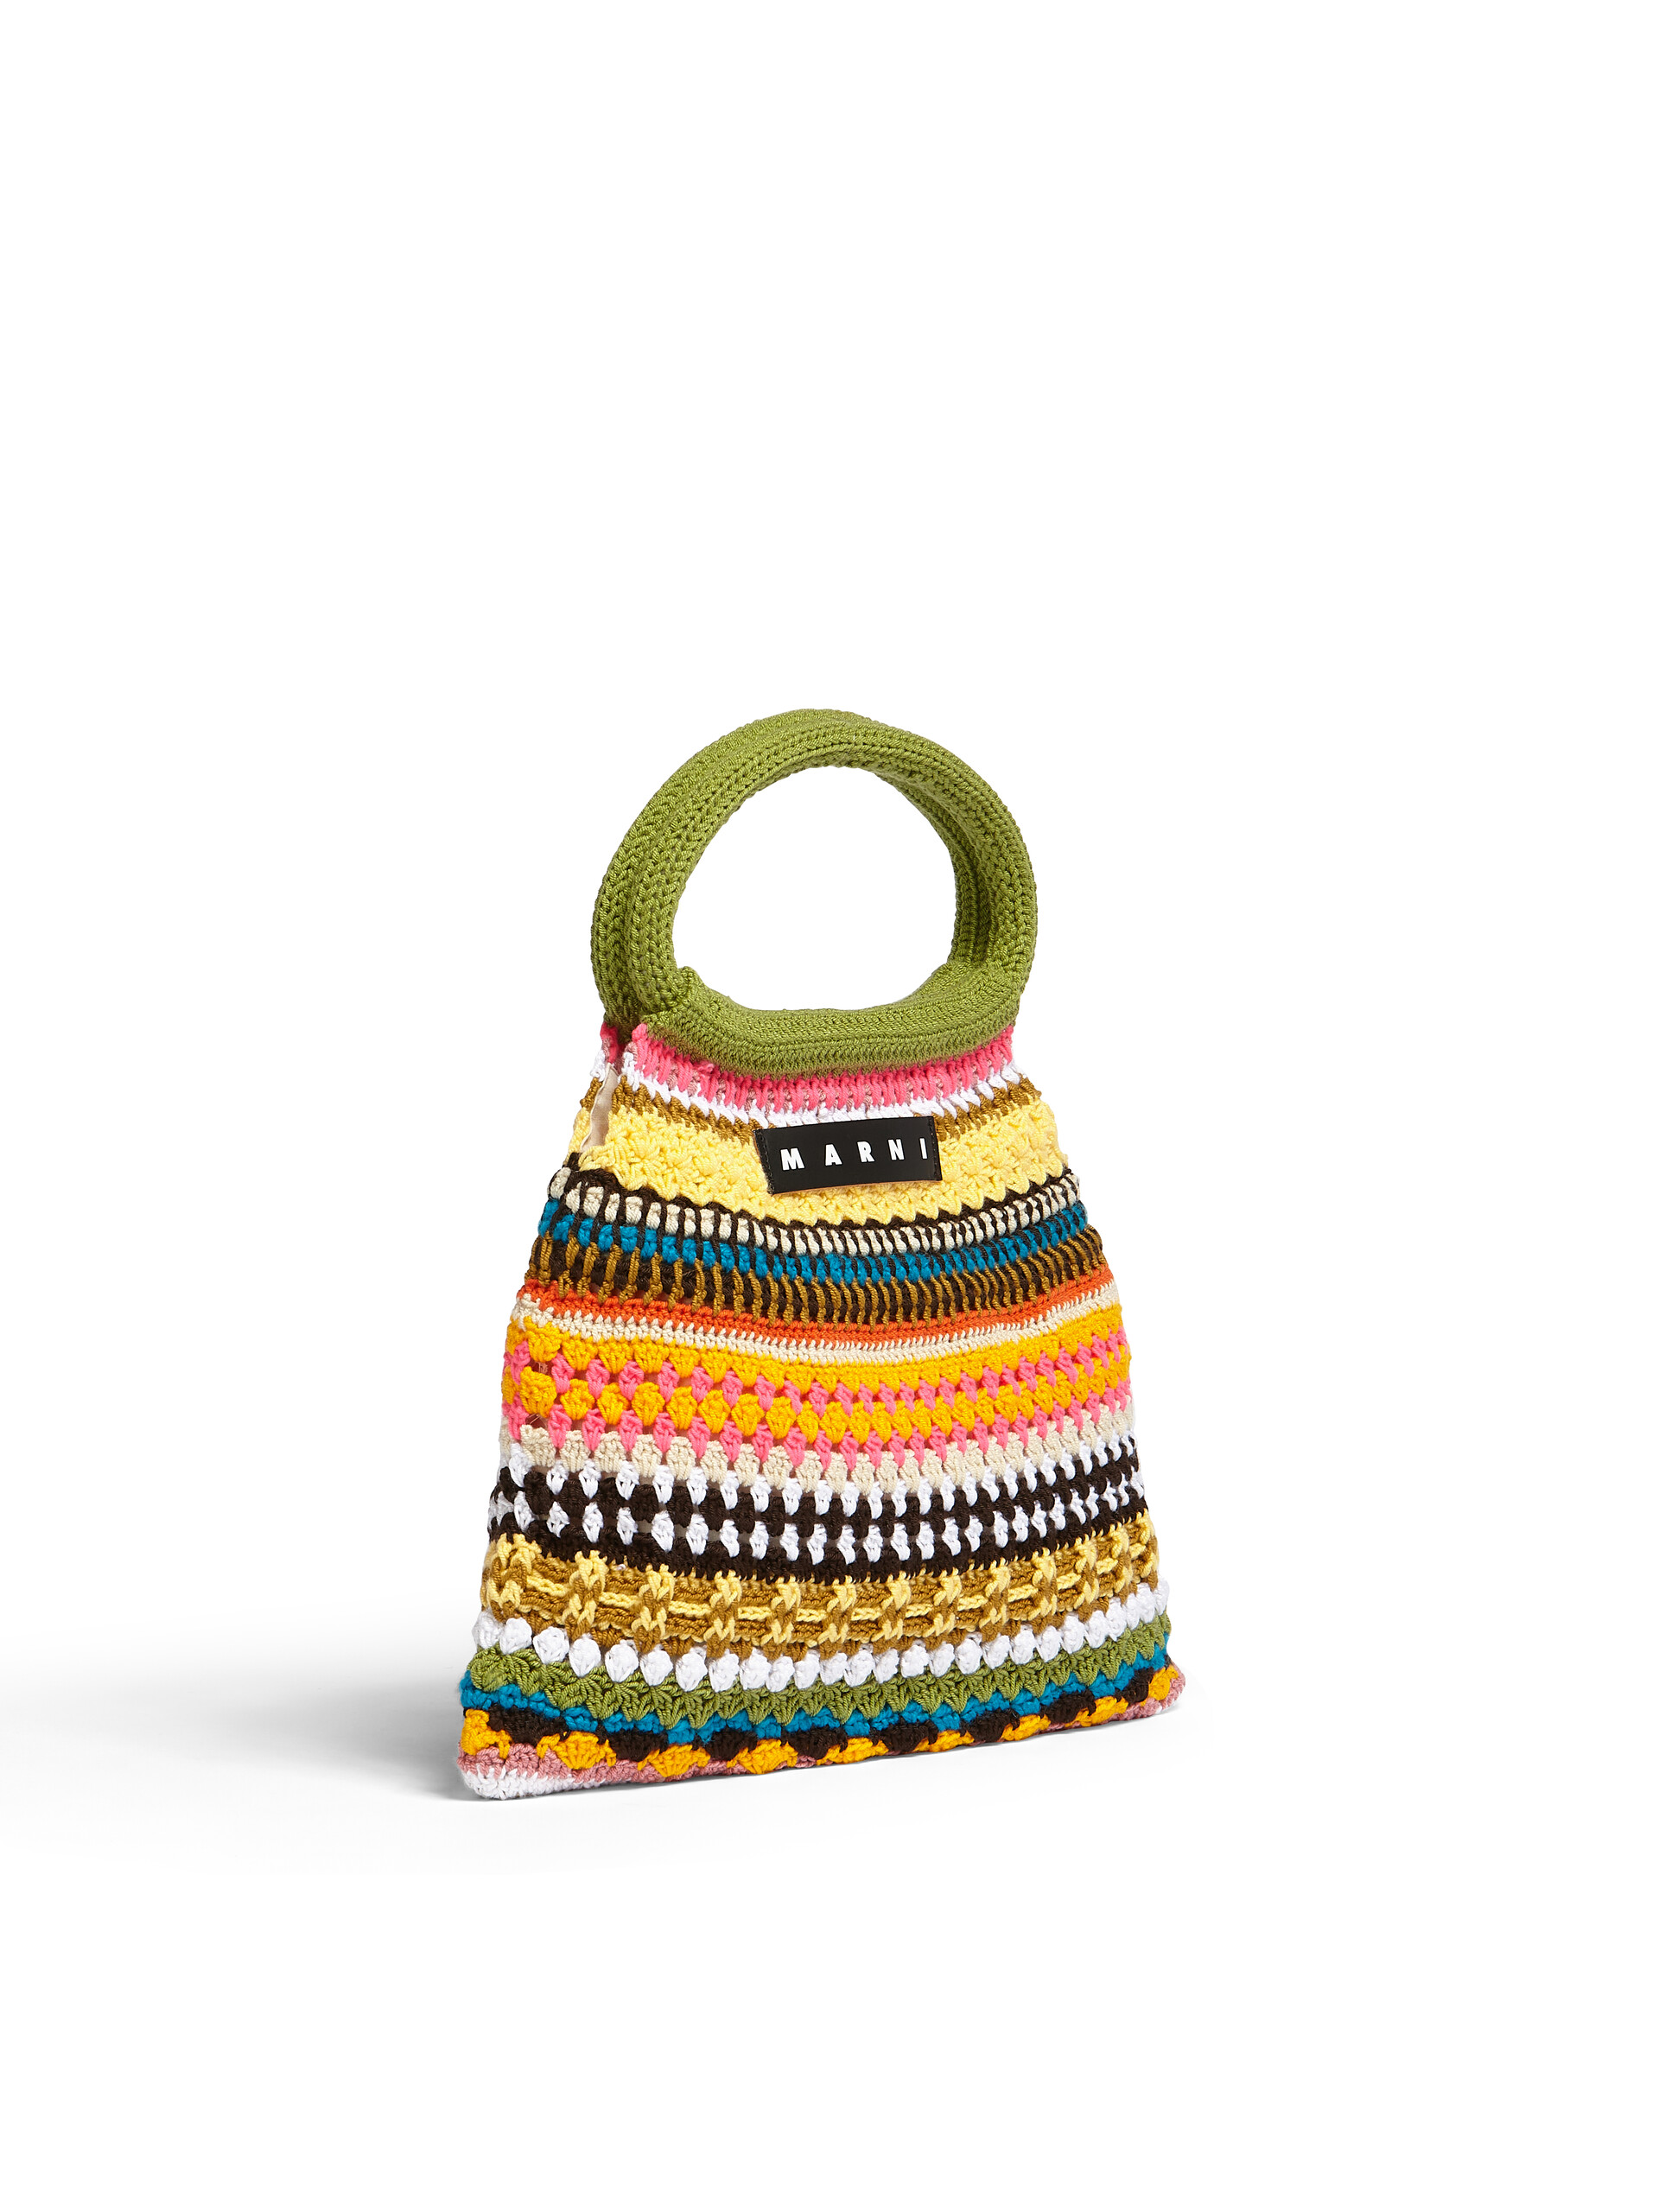 MARNI MARKET GRANNY bag in green crochet - Bags - Image 2